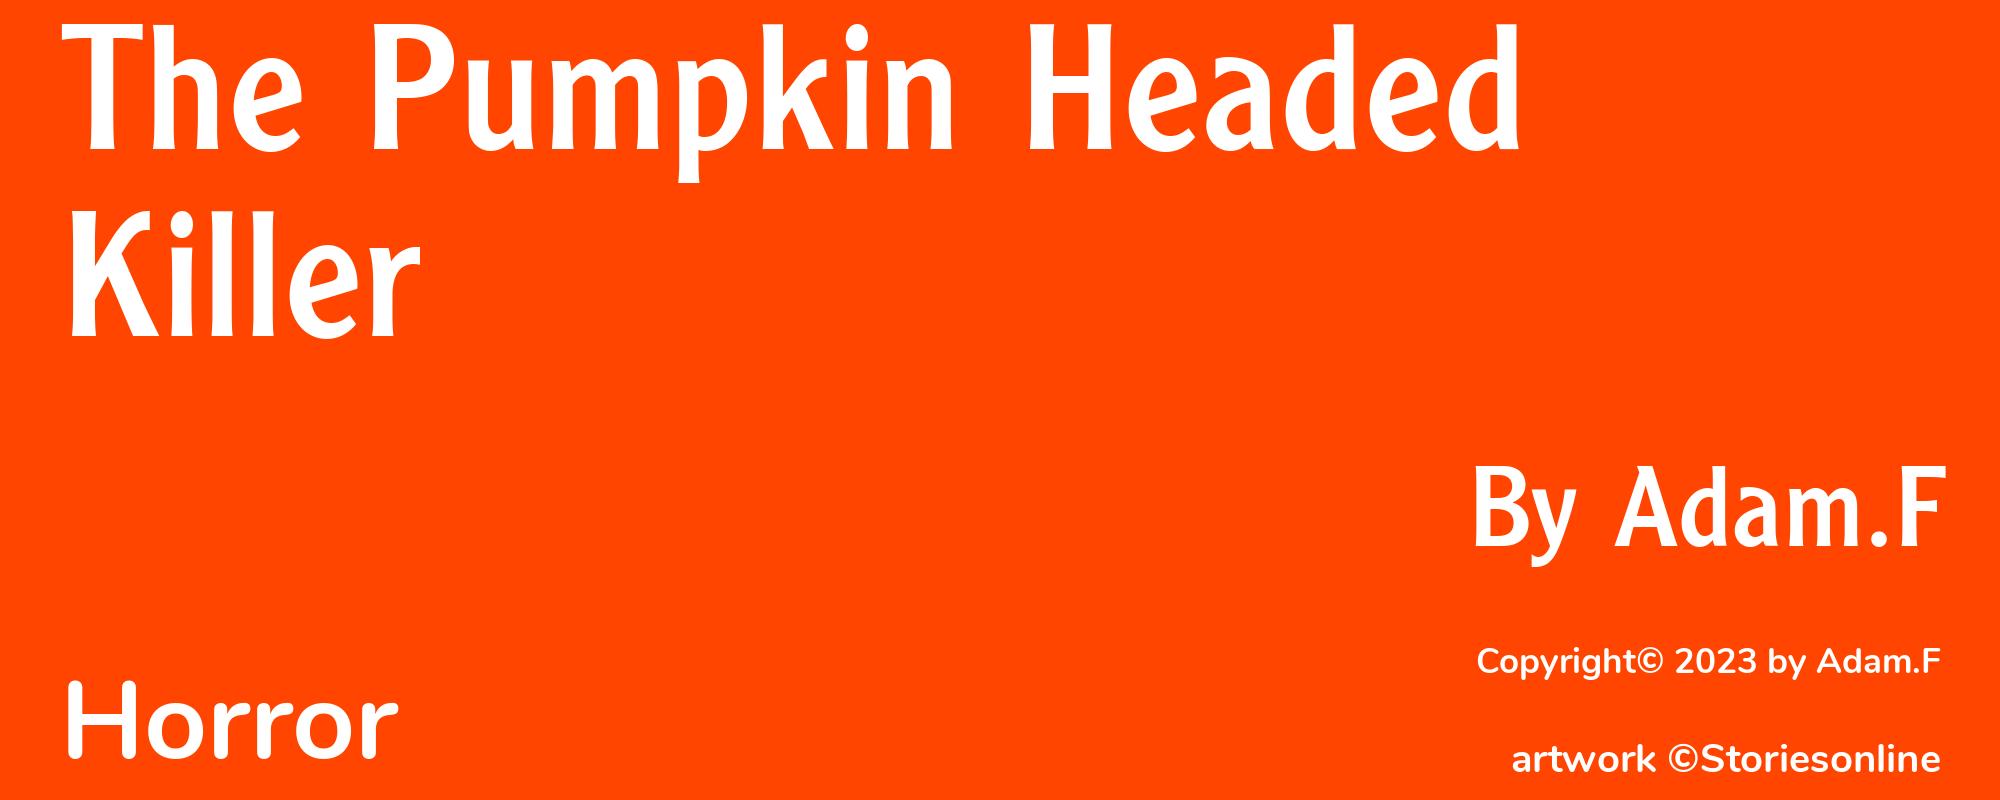 The Pumpkin Headed Killer - Cover